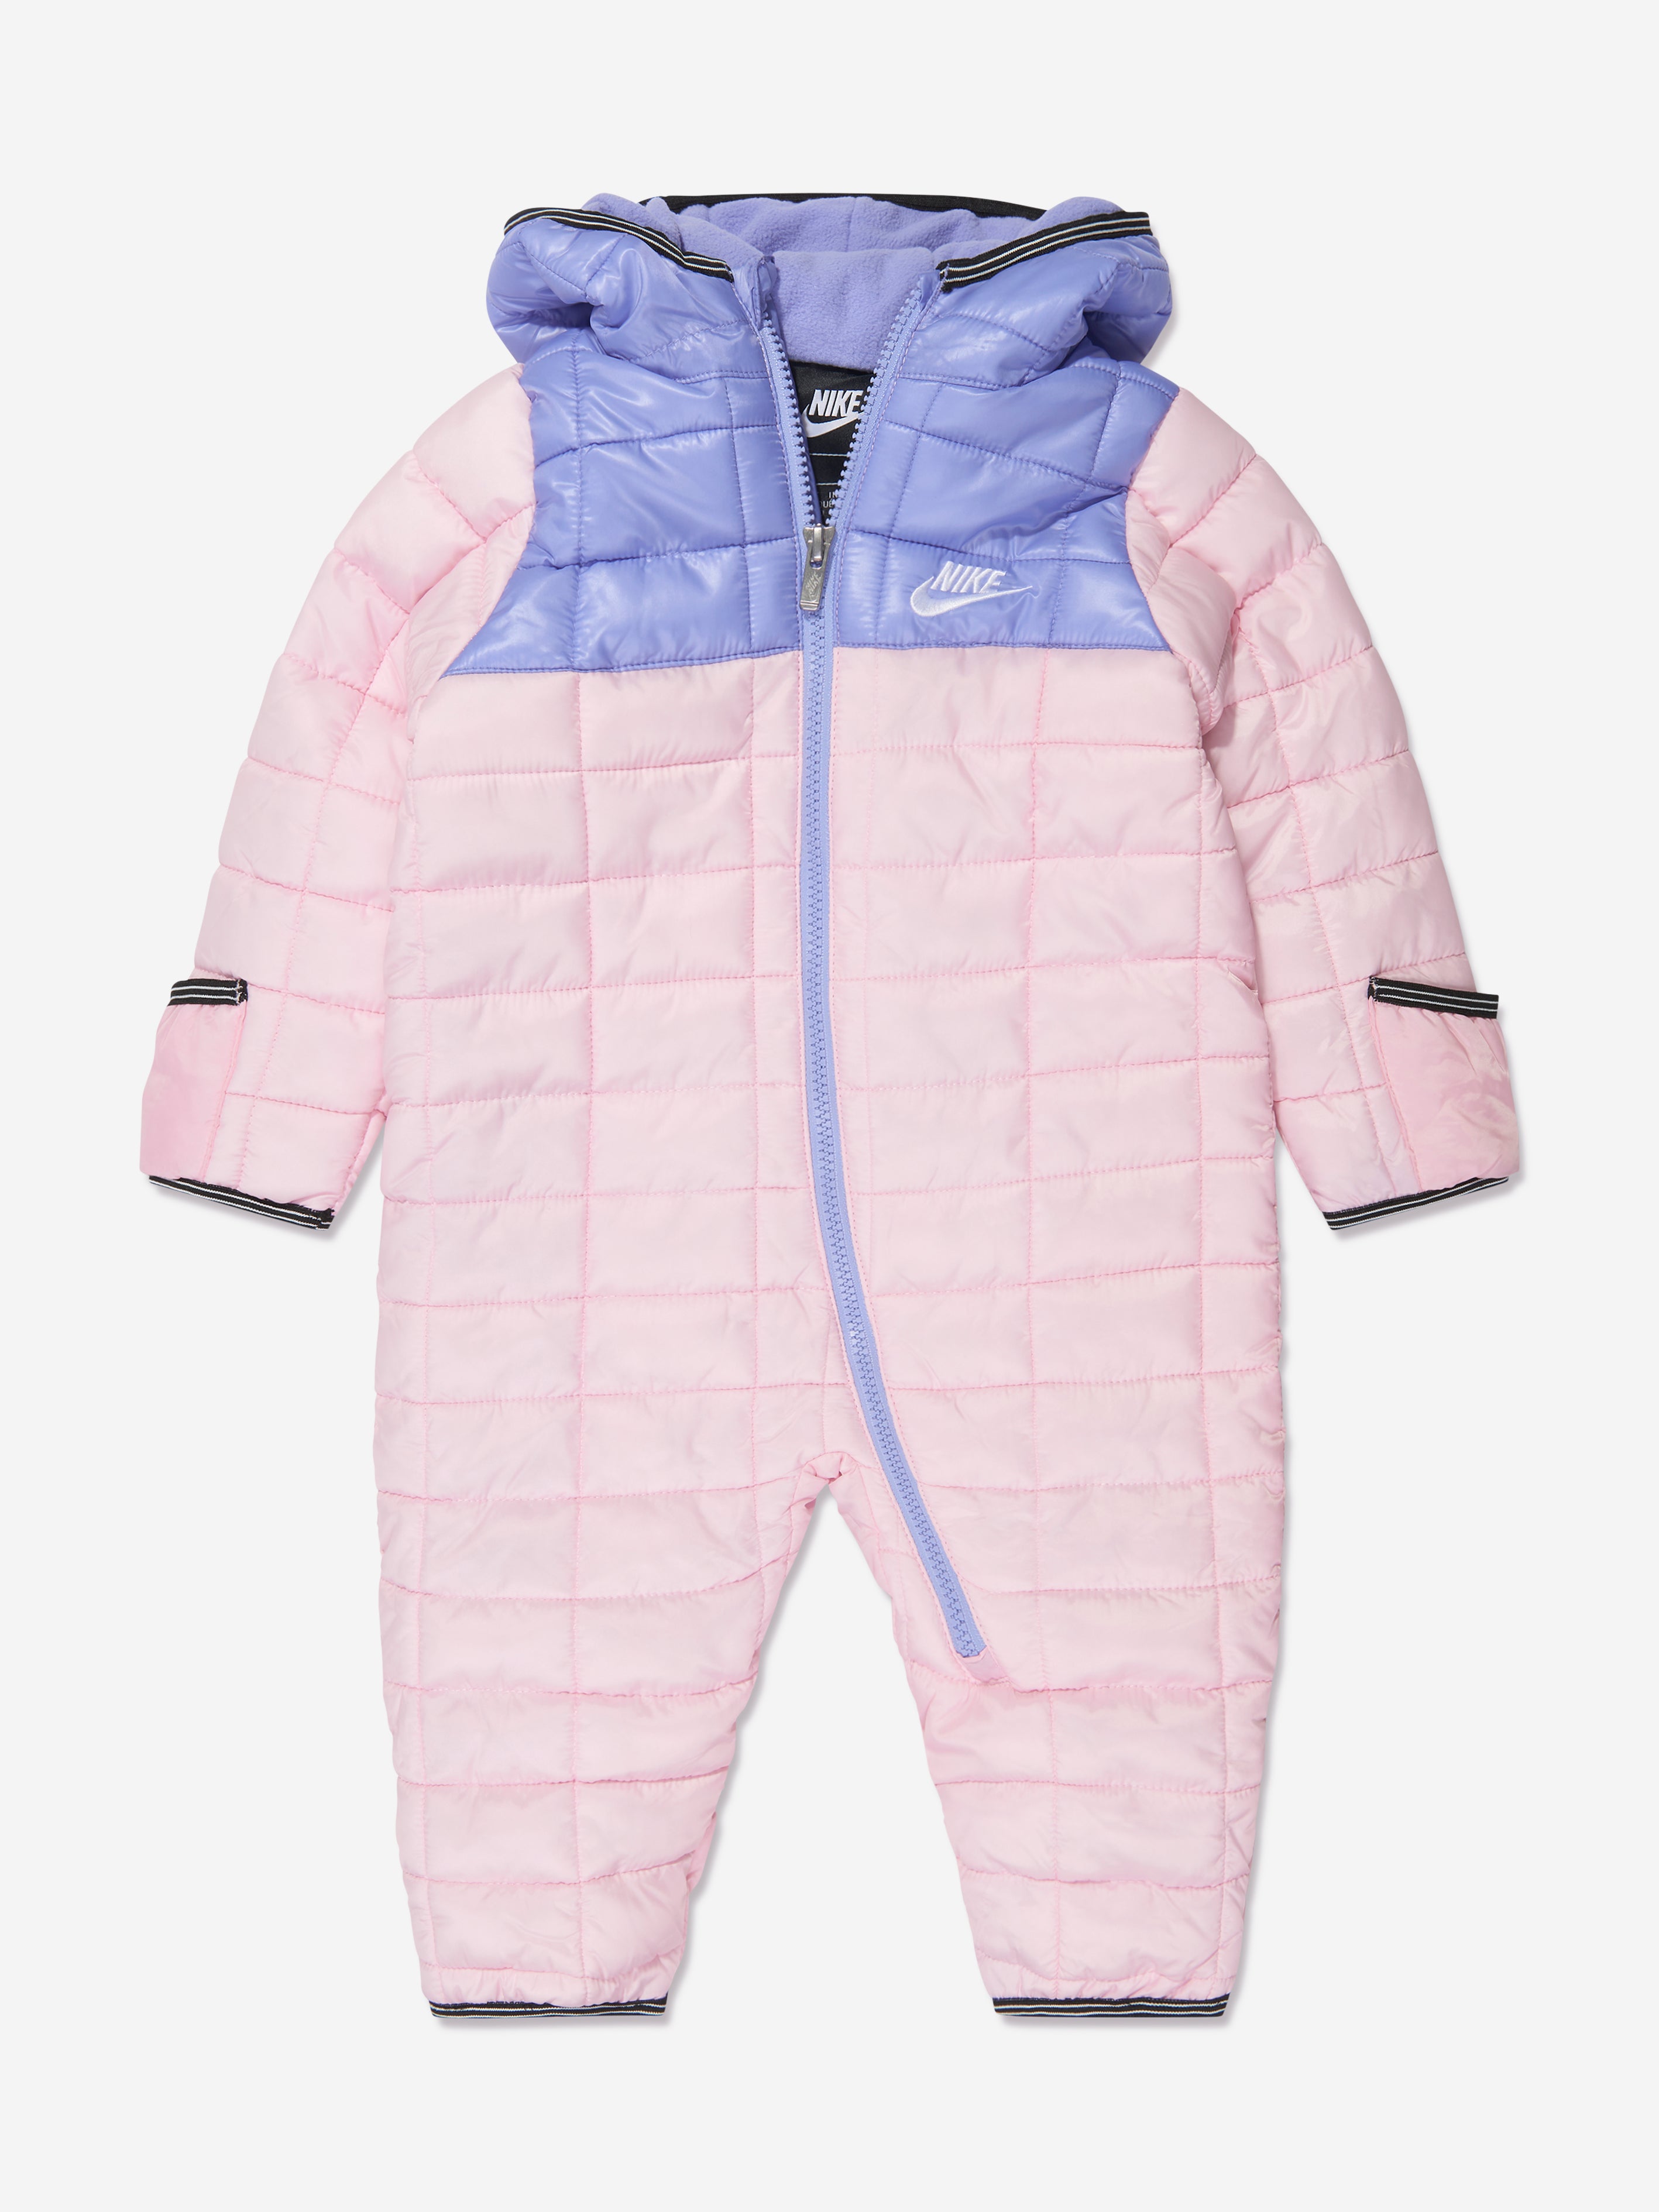 | in Girls Colourblock Childsplay Pink Clothing Baby Snowsuit